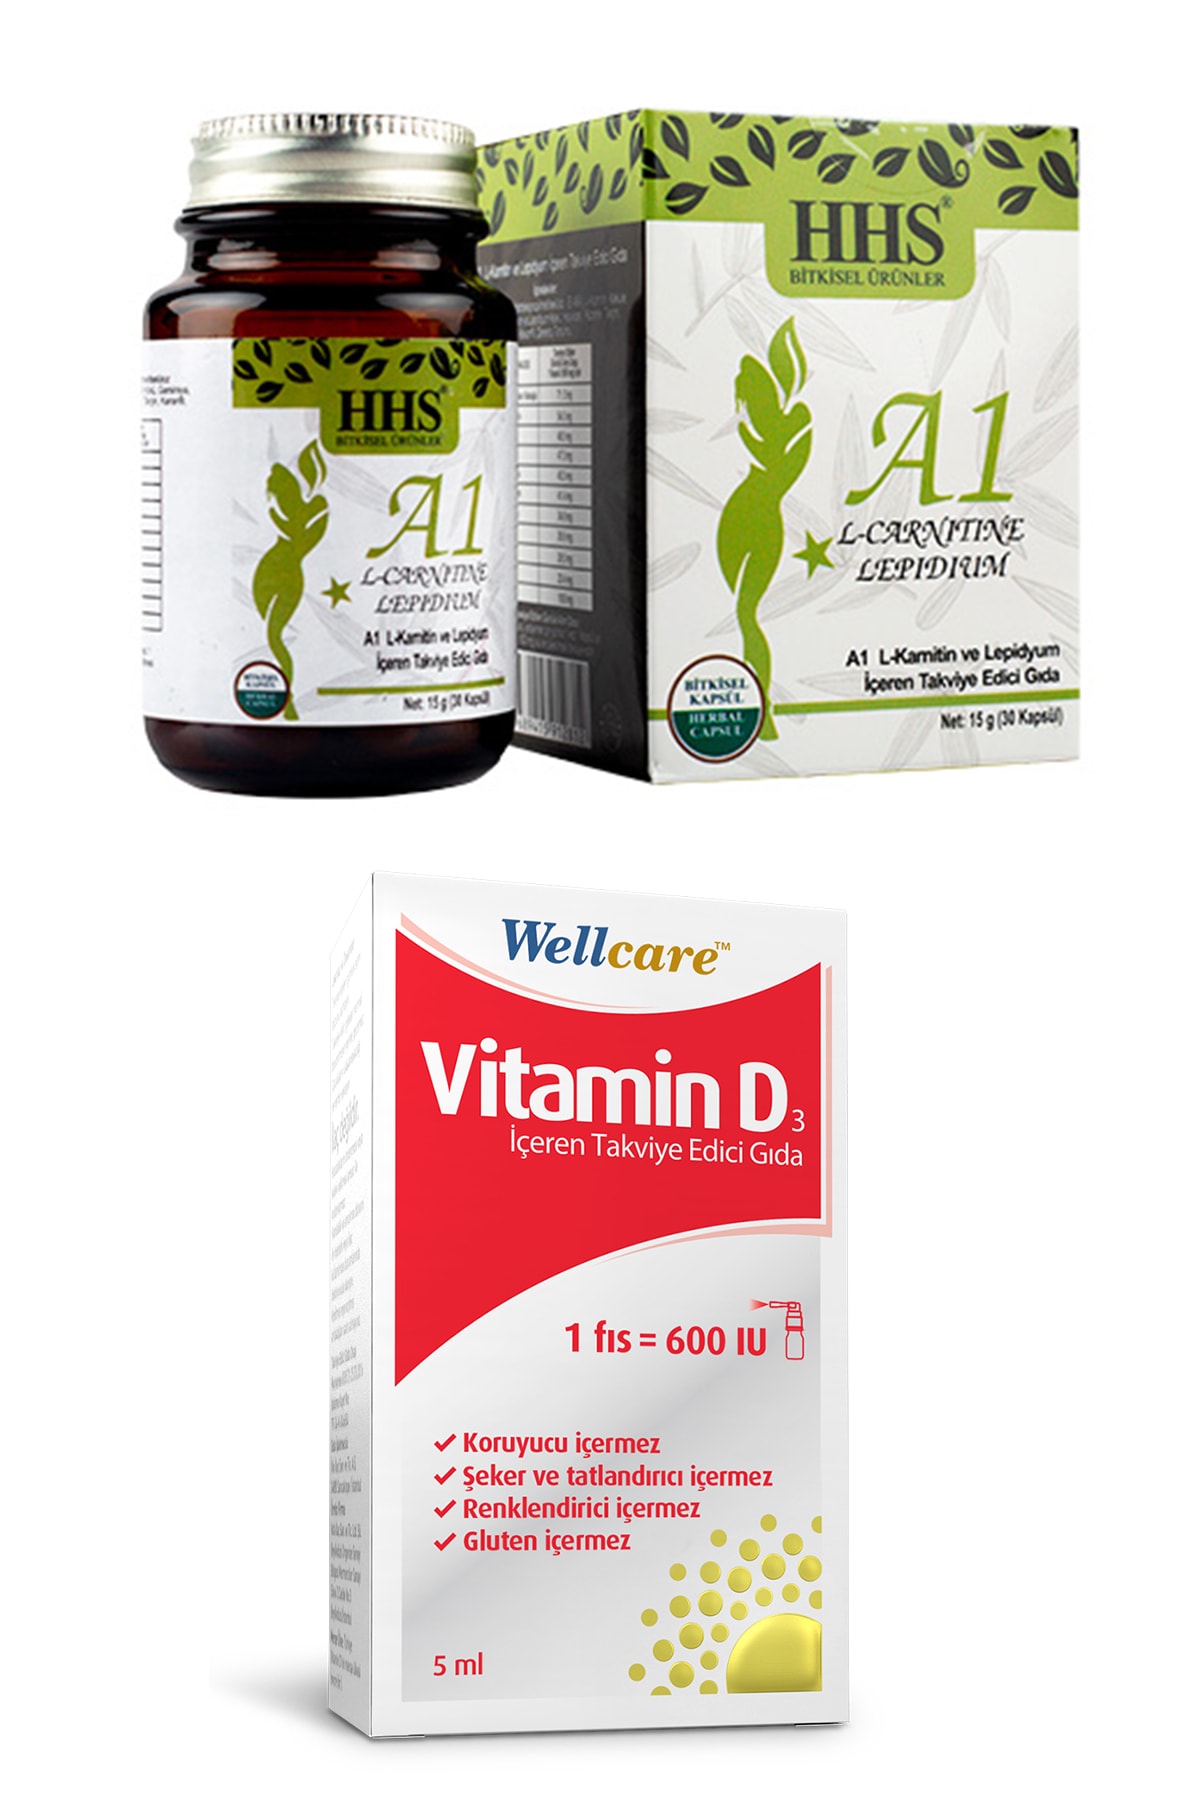 Hhs A1 Bitkisel 30 Kapsül Ve Wellcare Vitamin D3 600 Iu